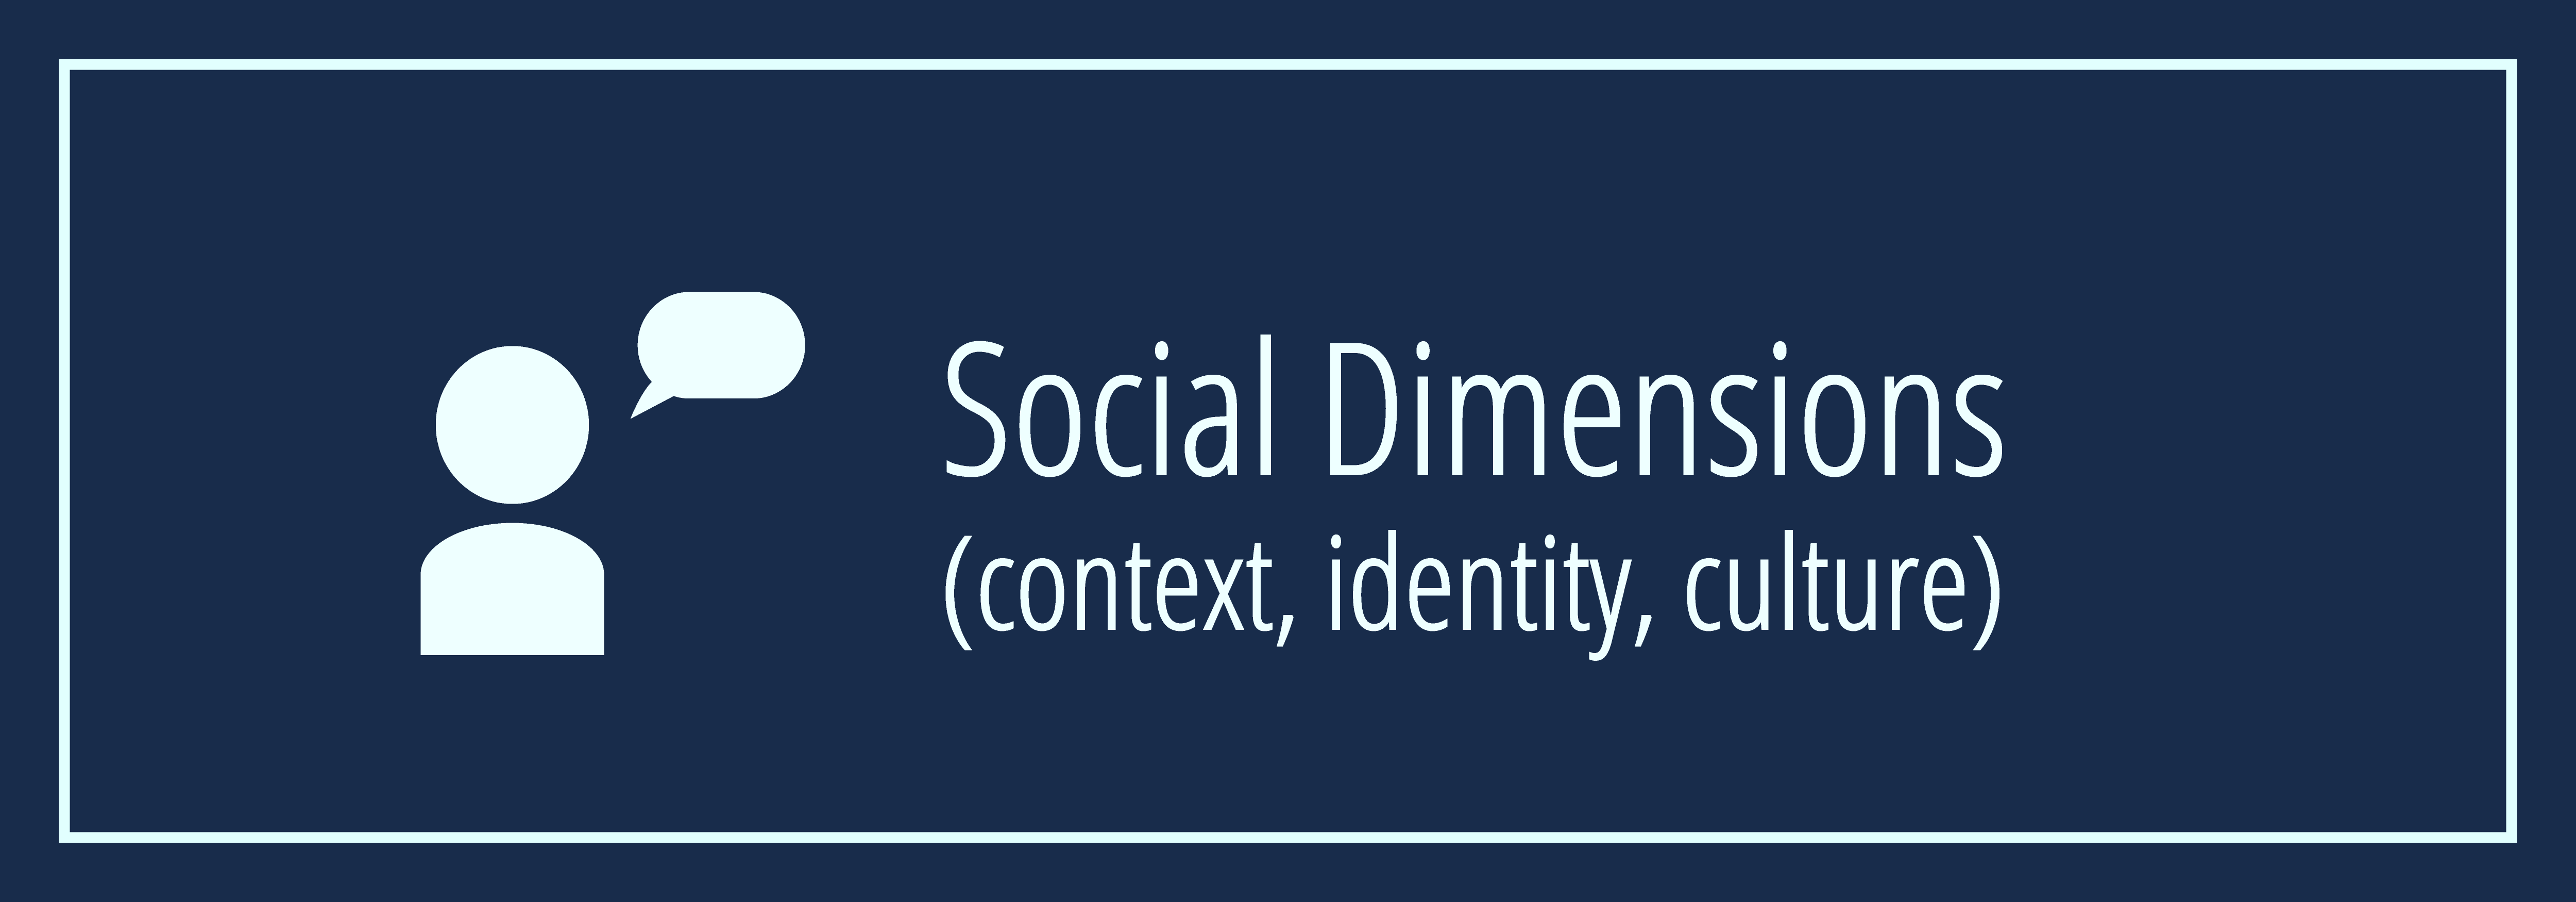 social dimensions image